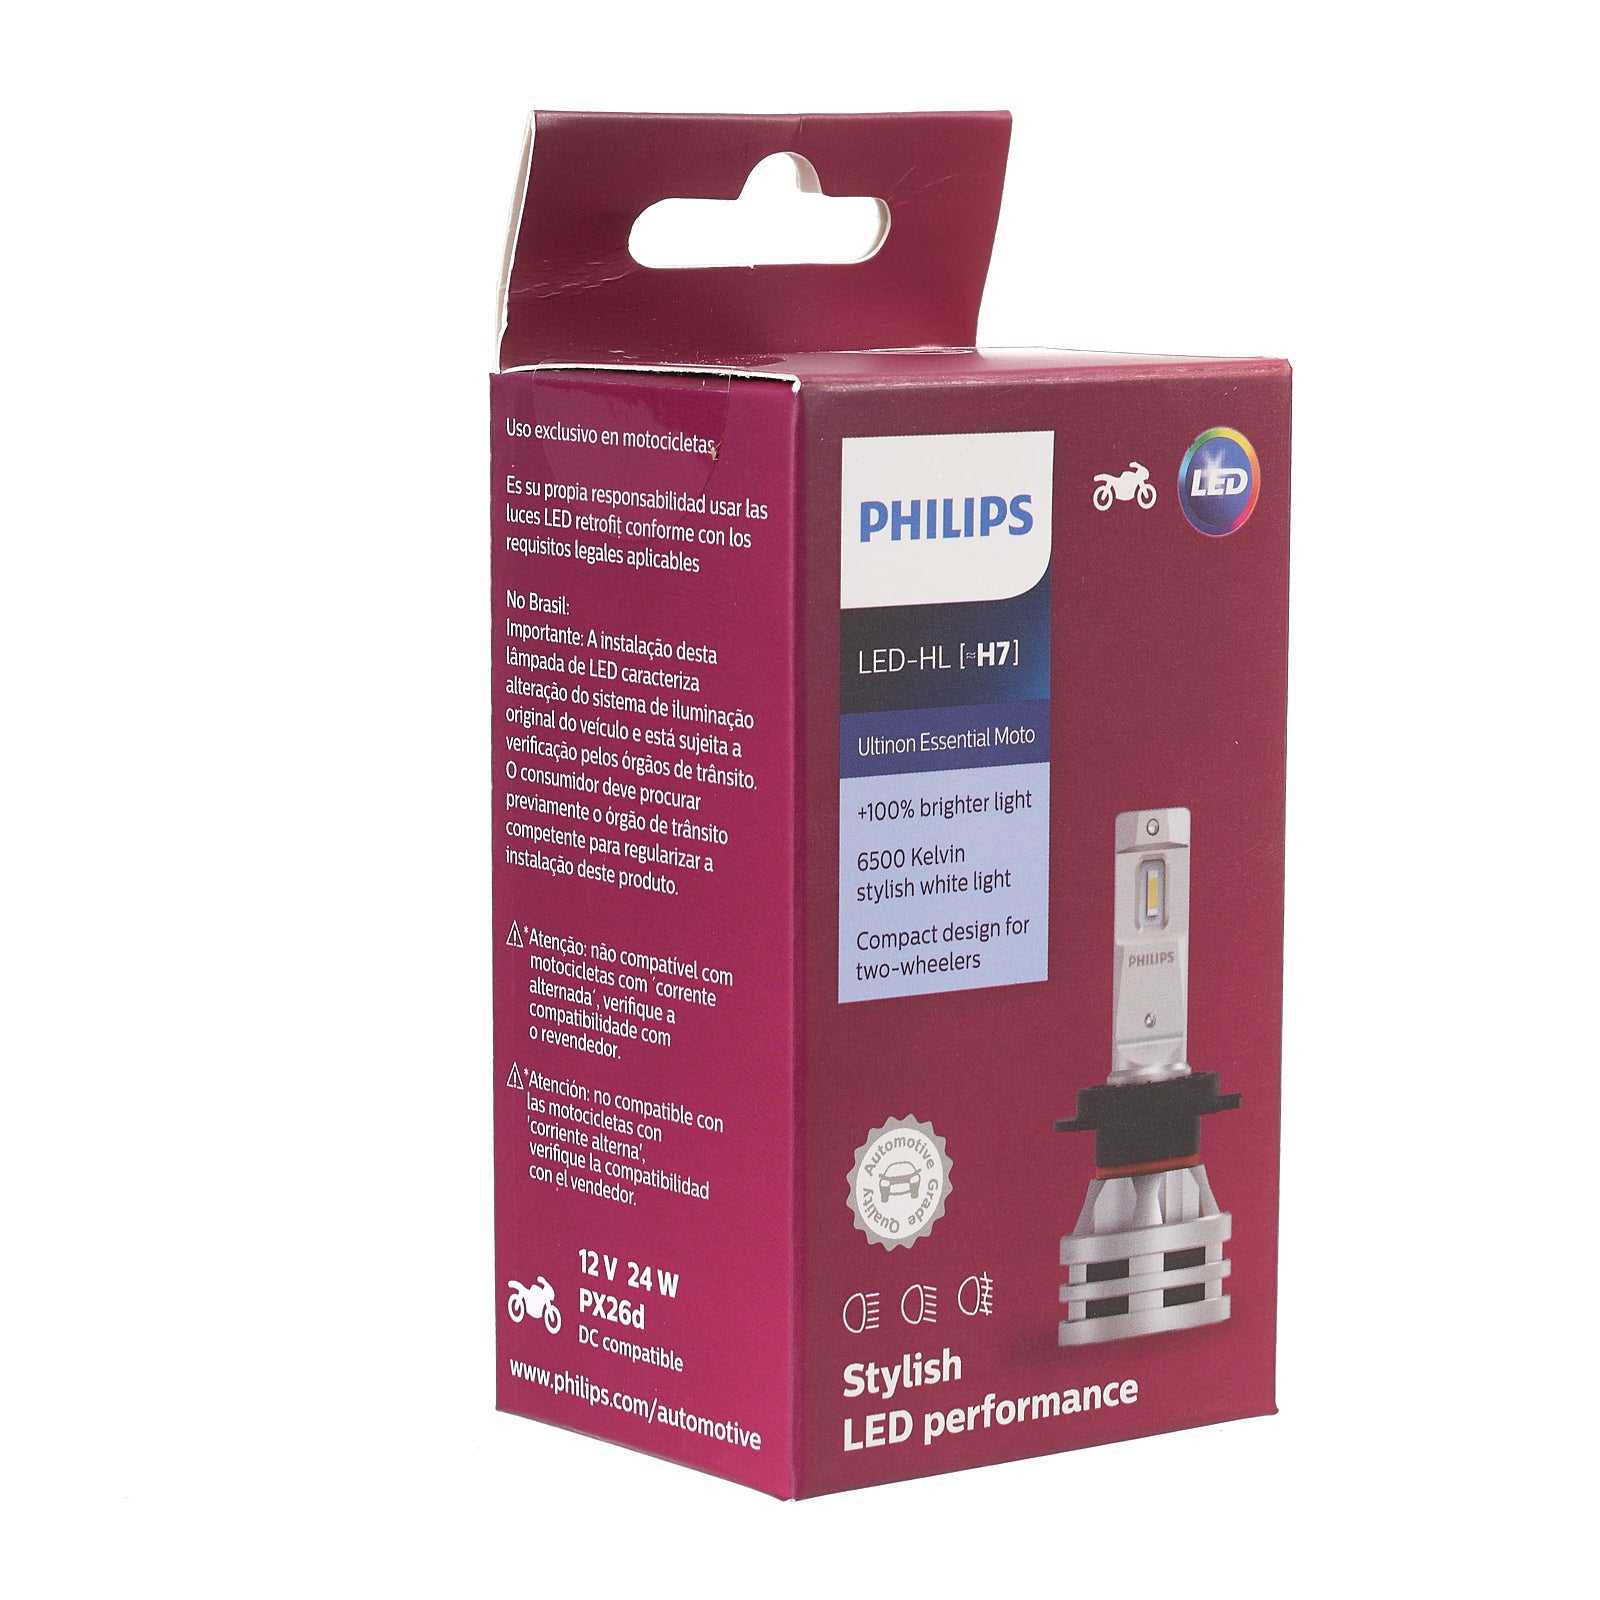 Philips, Philips Bulb LED H7 11972 UE2 12V Ultinon